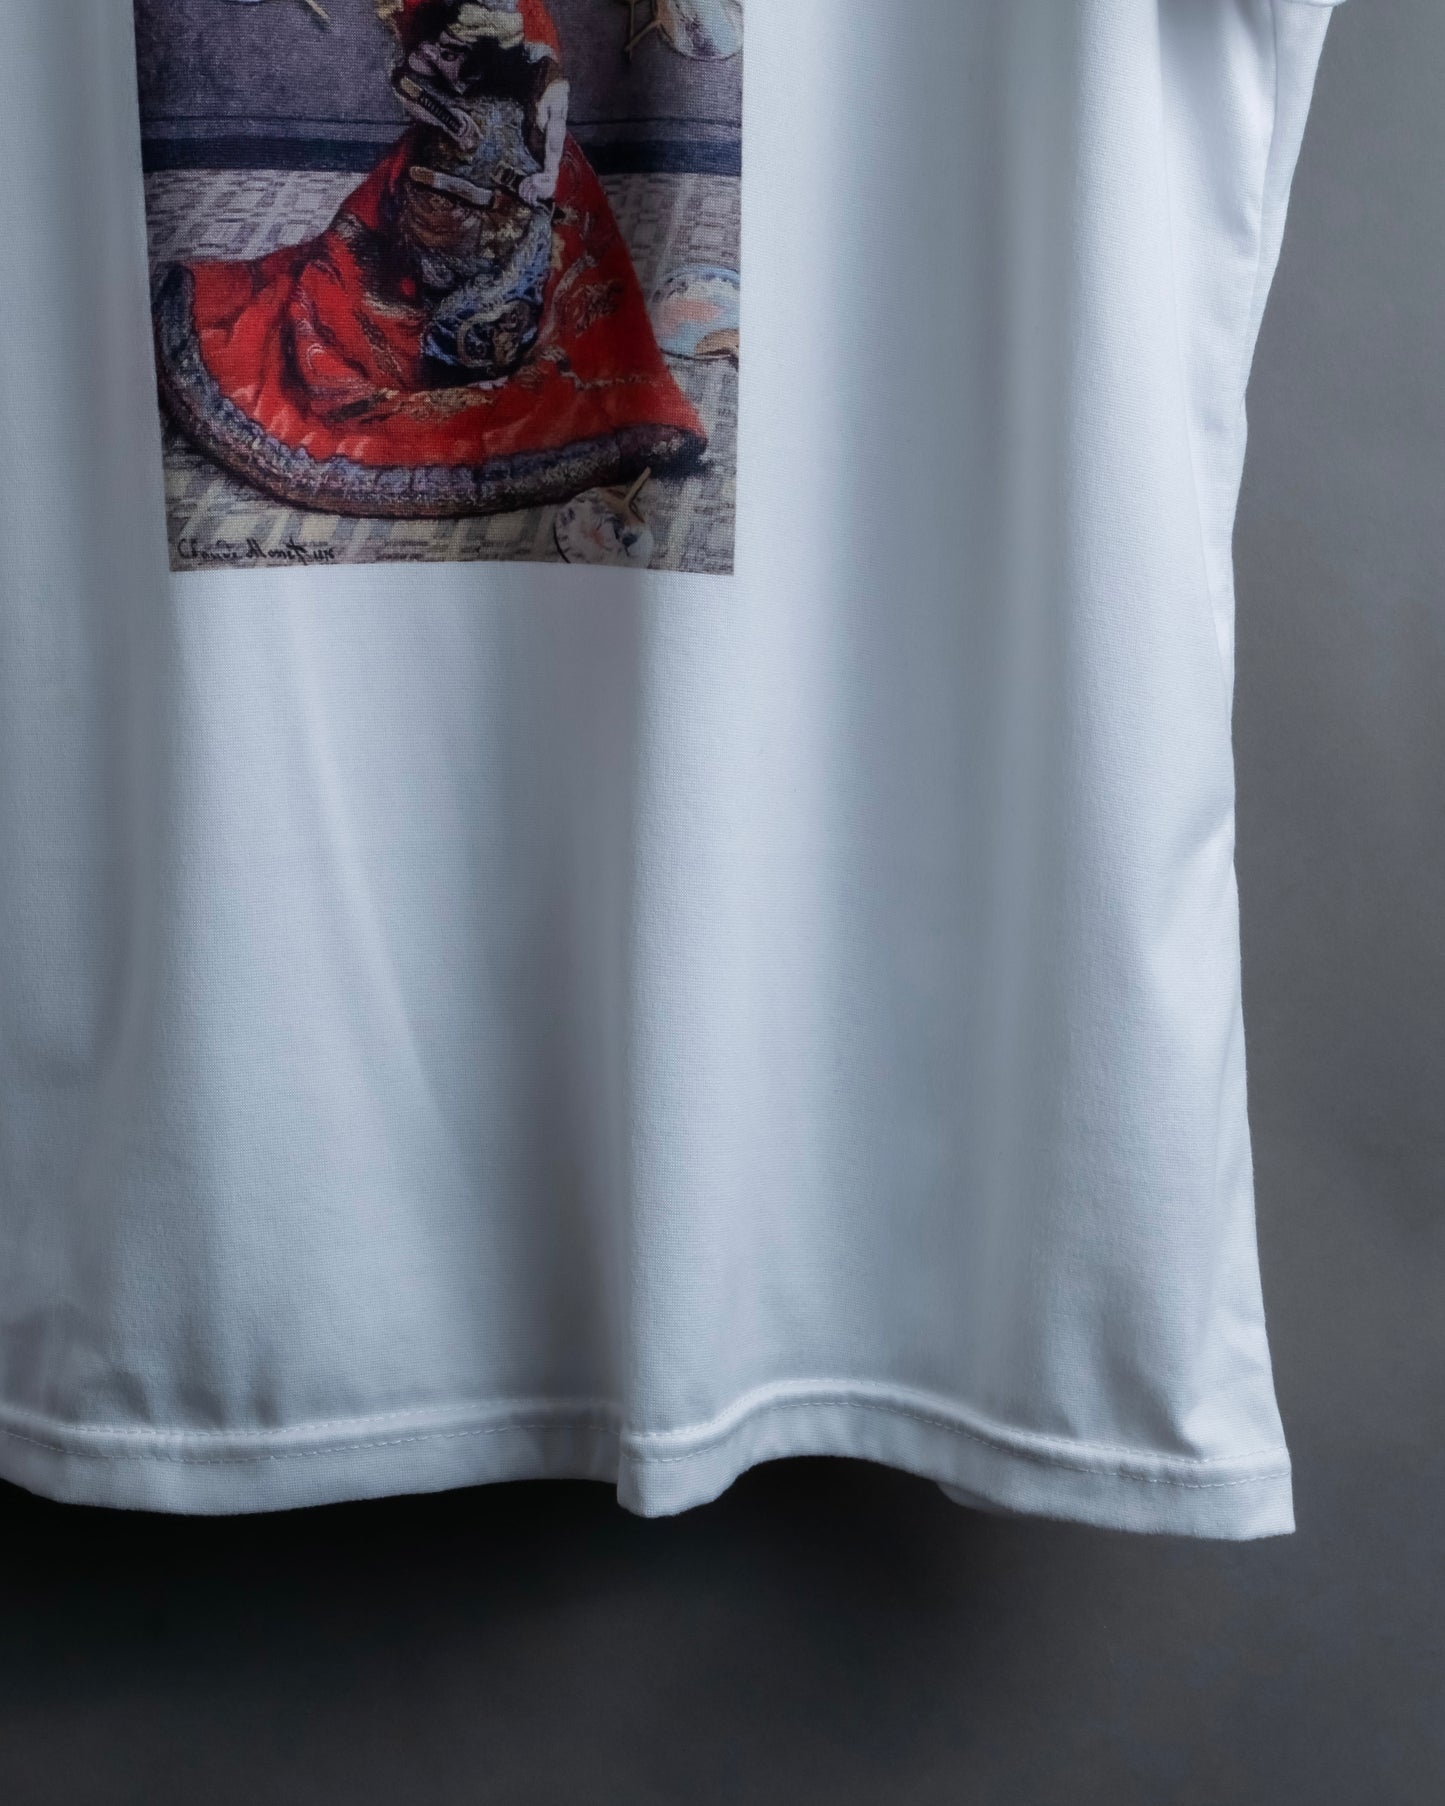 “Vintage” Claude Monet painting printed T shirt